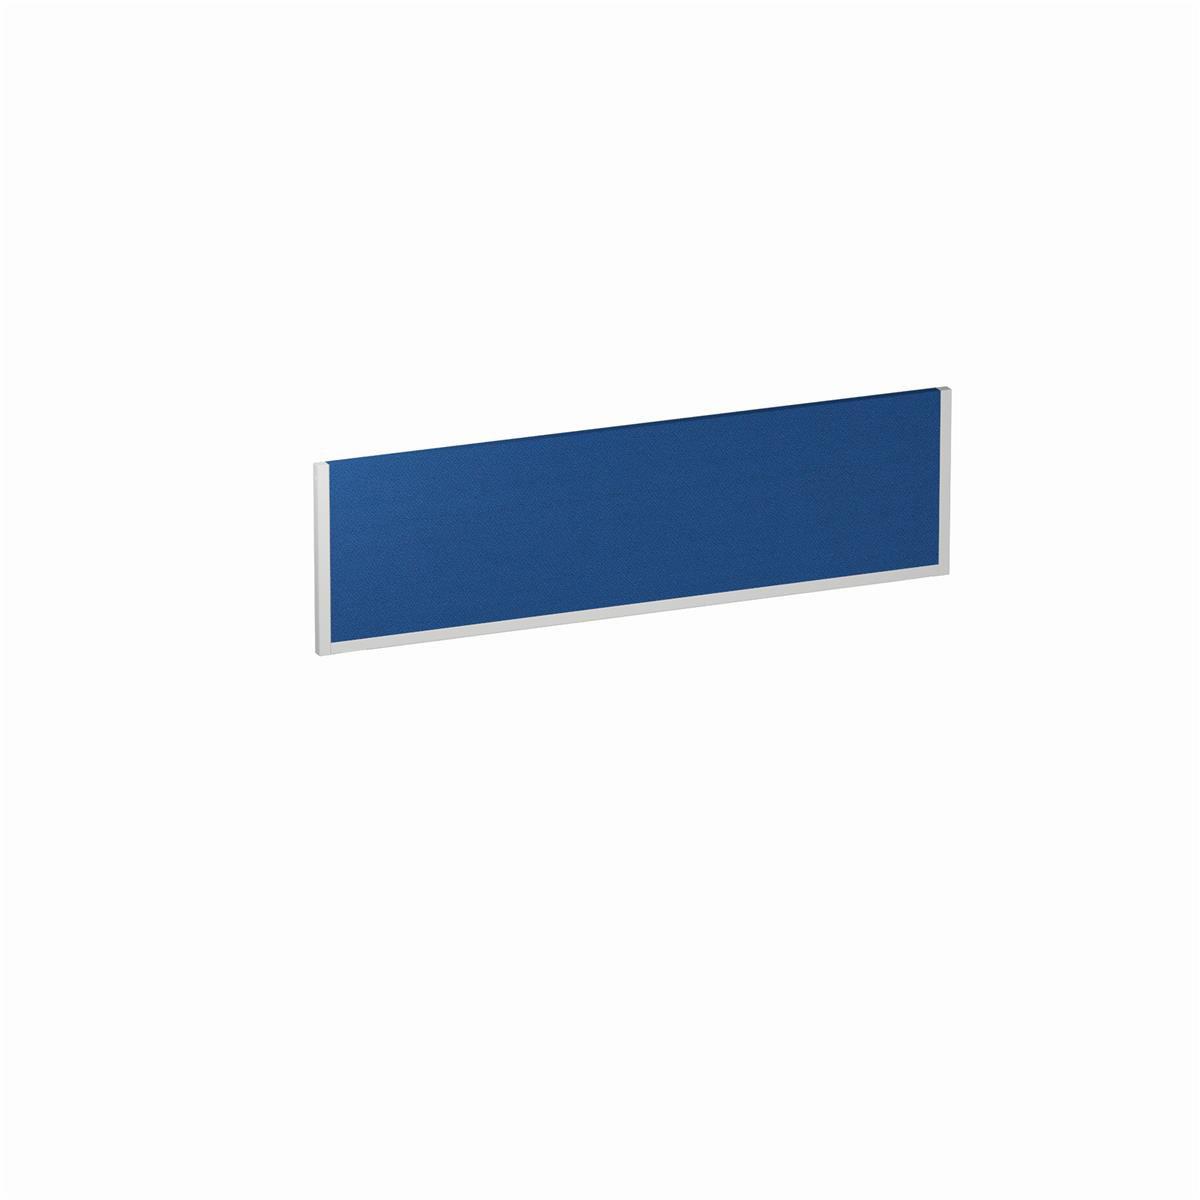 Rectangular Blue and White Logo - Trexus 1400x400 Rectangular Bench Desk Screen Blue/White 1400x400mm ...